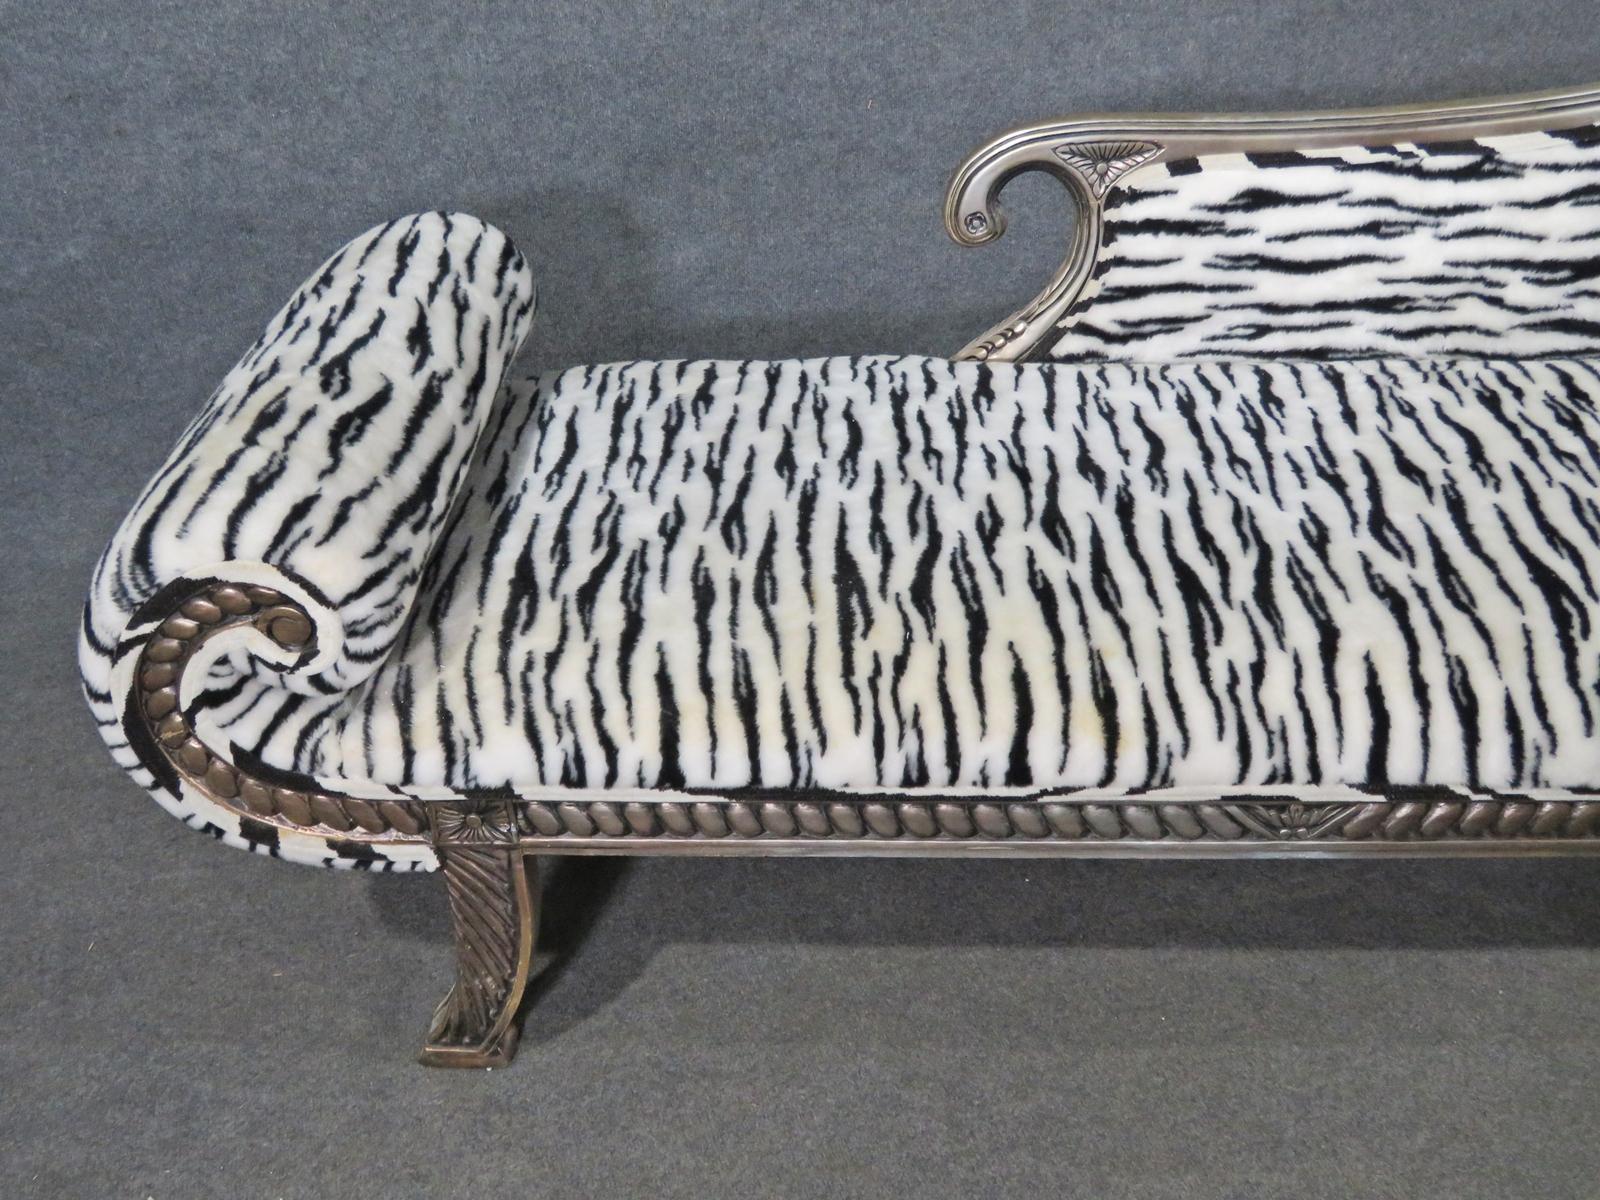 Regency Revival English Regency Style Zebra Print Upholstered Recamier Chaise Daybed